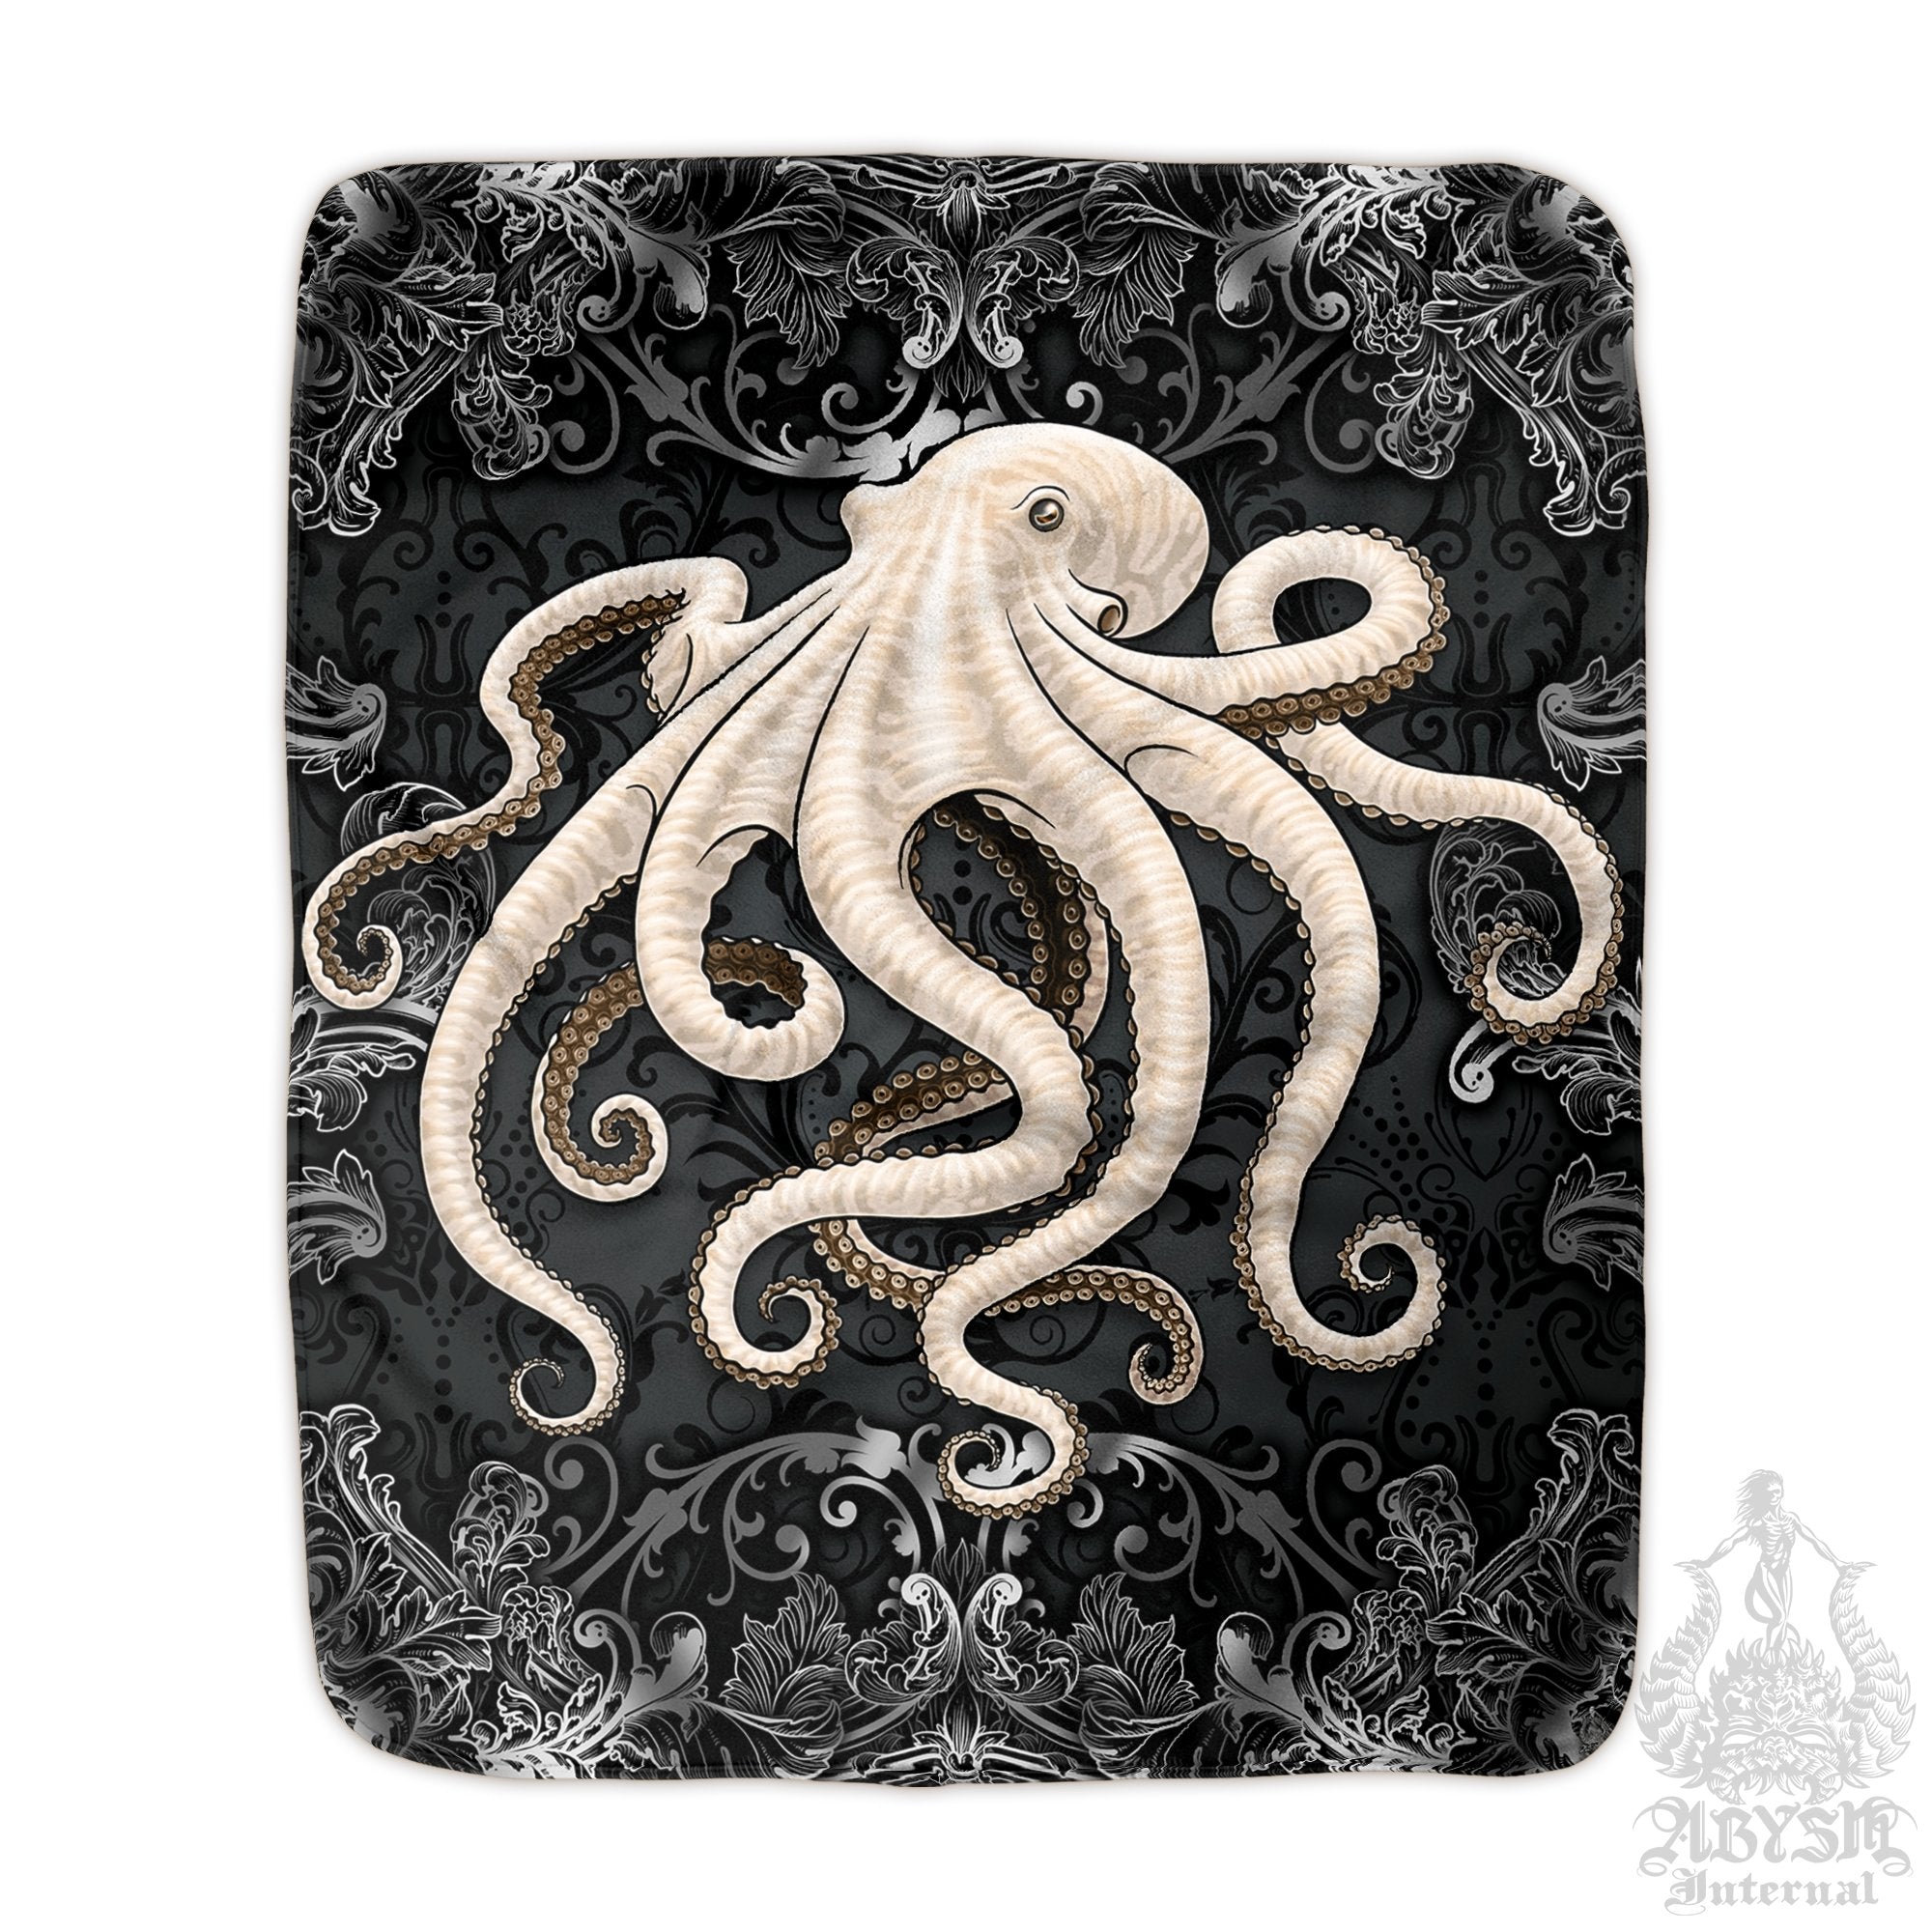 Octopus Throw Fleece Blanket, Gothic Gift, Coastal Goth Home Decor, Alternative Art Gift - Dark, Black and White - Abysm Internal